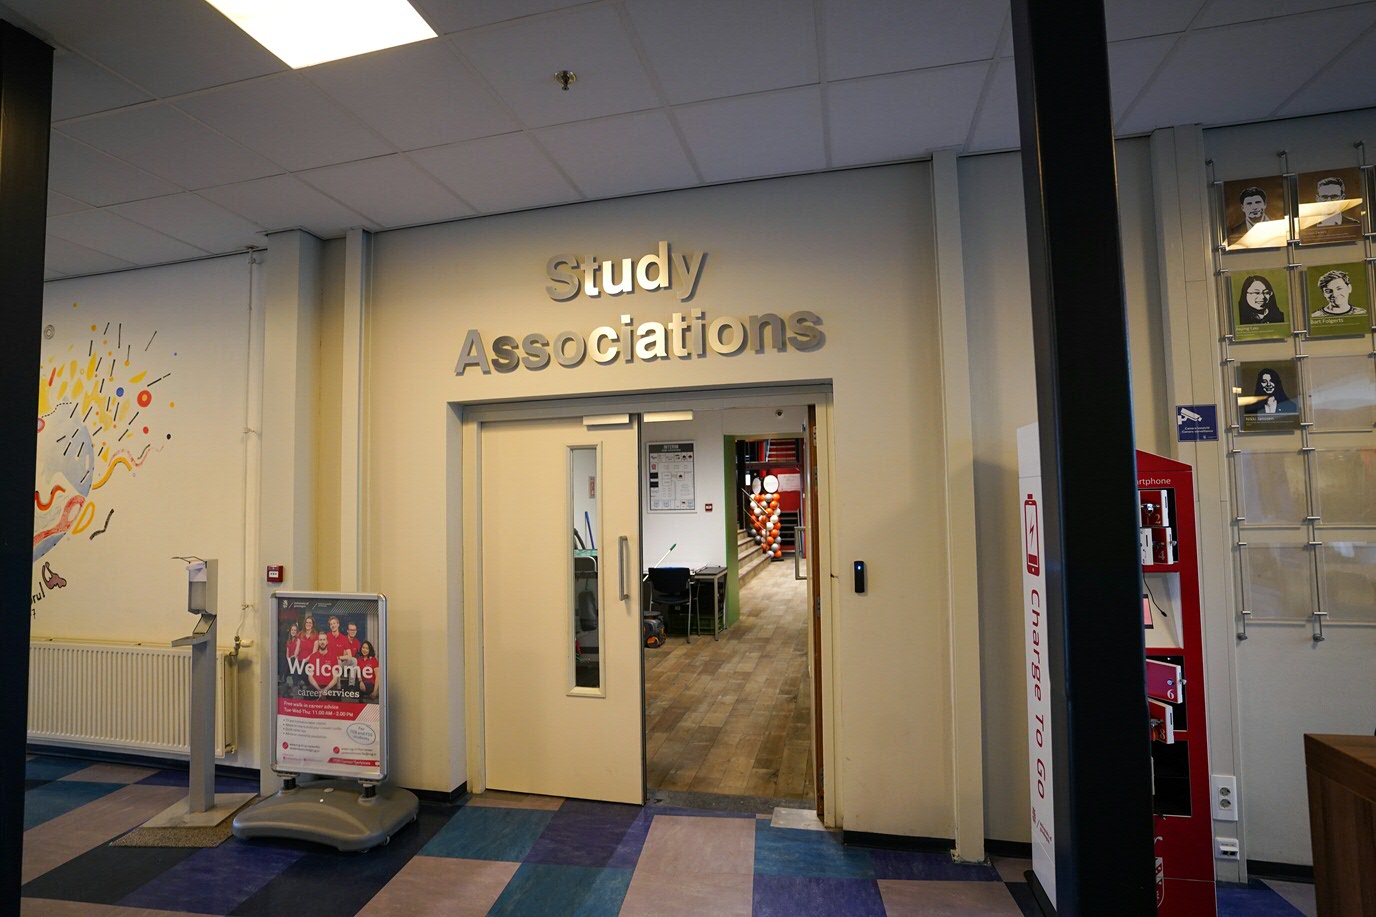 Entrance study associations in duisenberg plaza